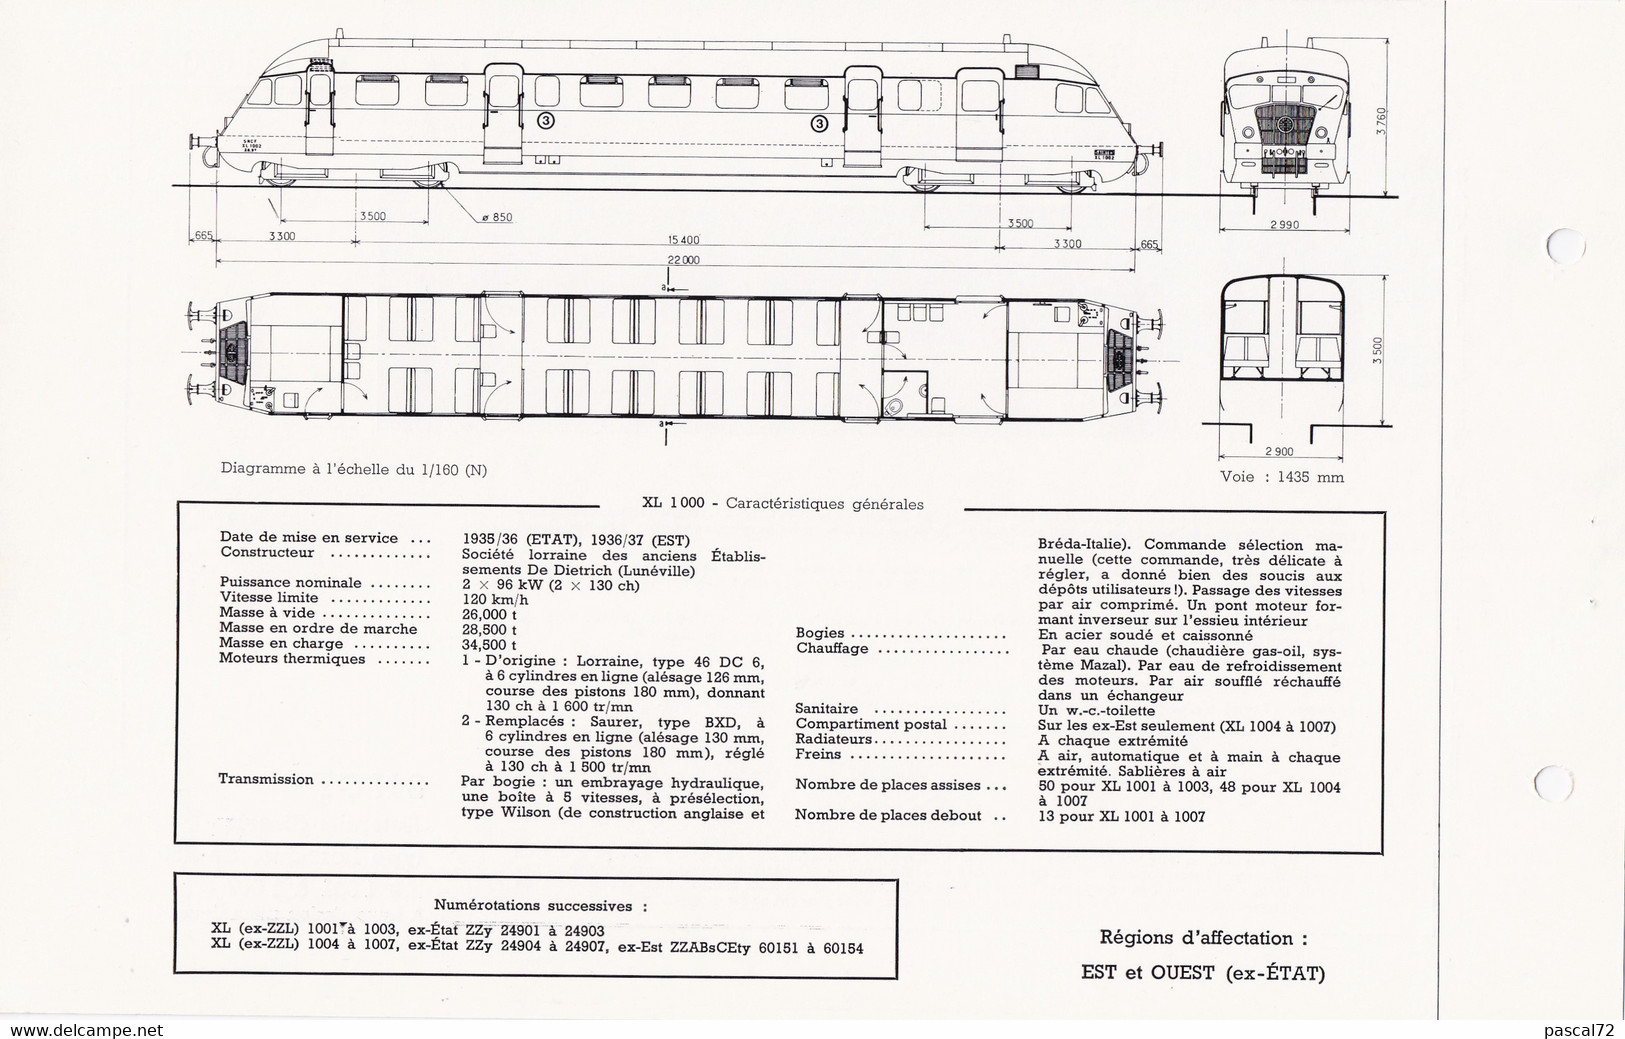 XL 1000 FICHE DOCUMENTAIRE LOCO REVUE N° 451 JUILLET 1973 - Francese